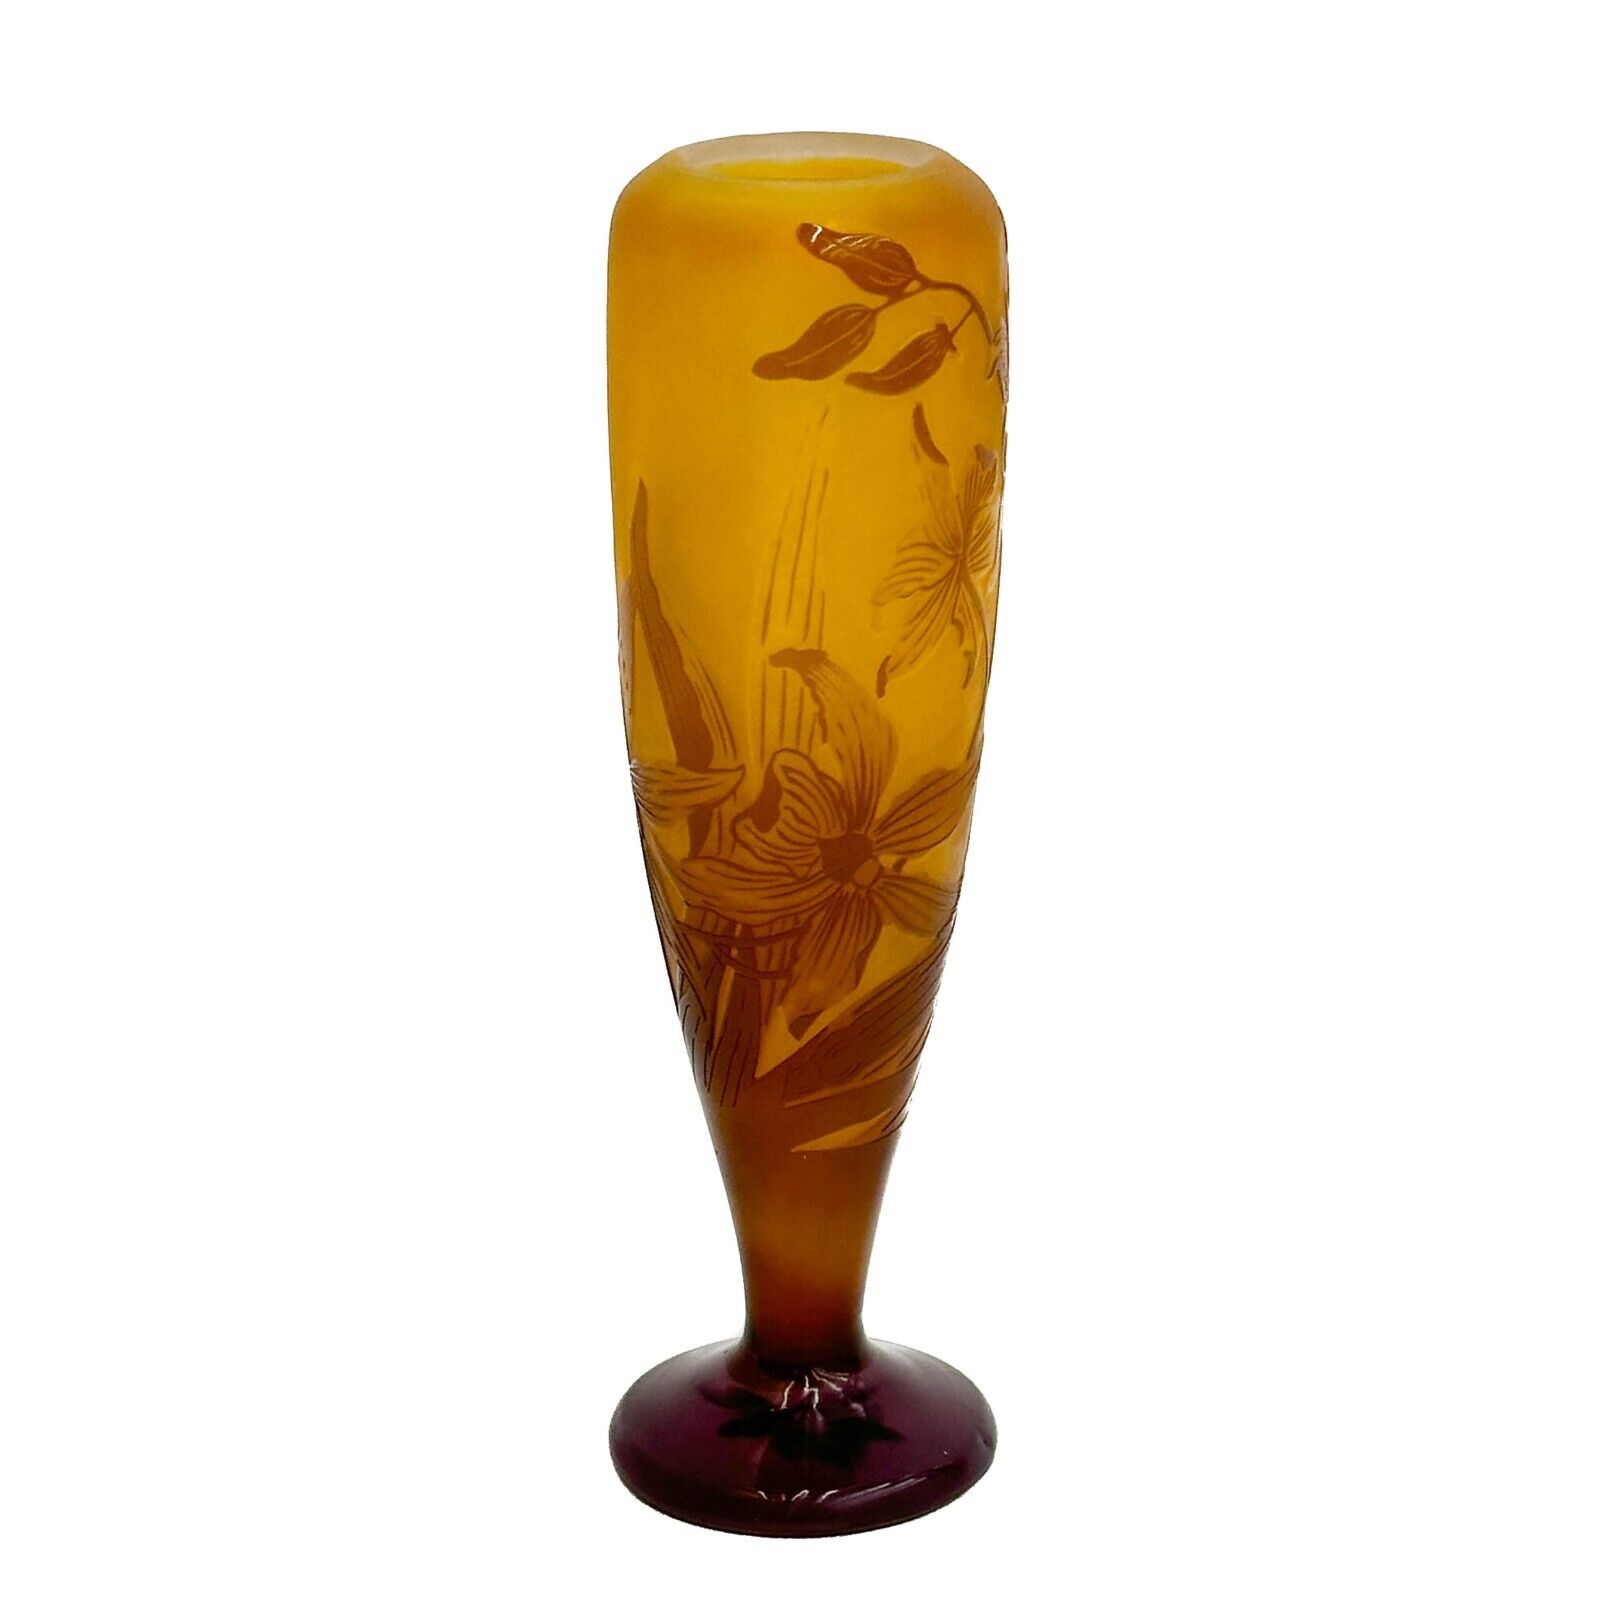 Emile Galle Acid Etched Cameo Art Glass Vase Irises Gold circa 1890